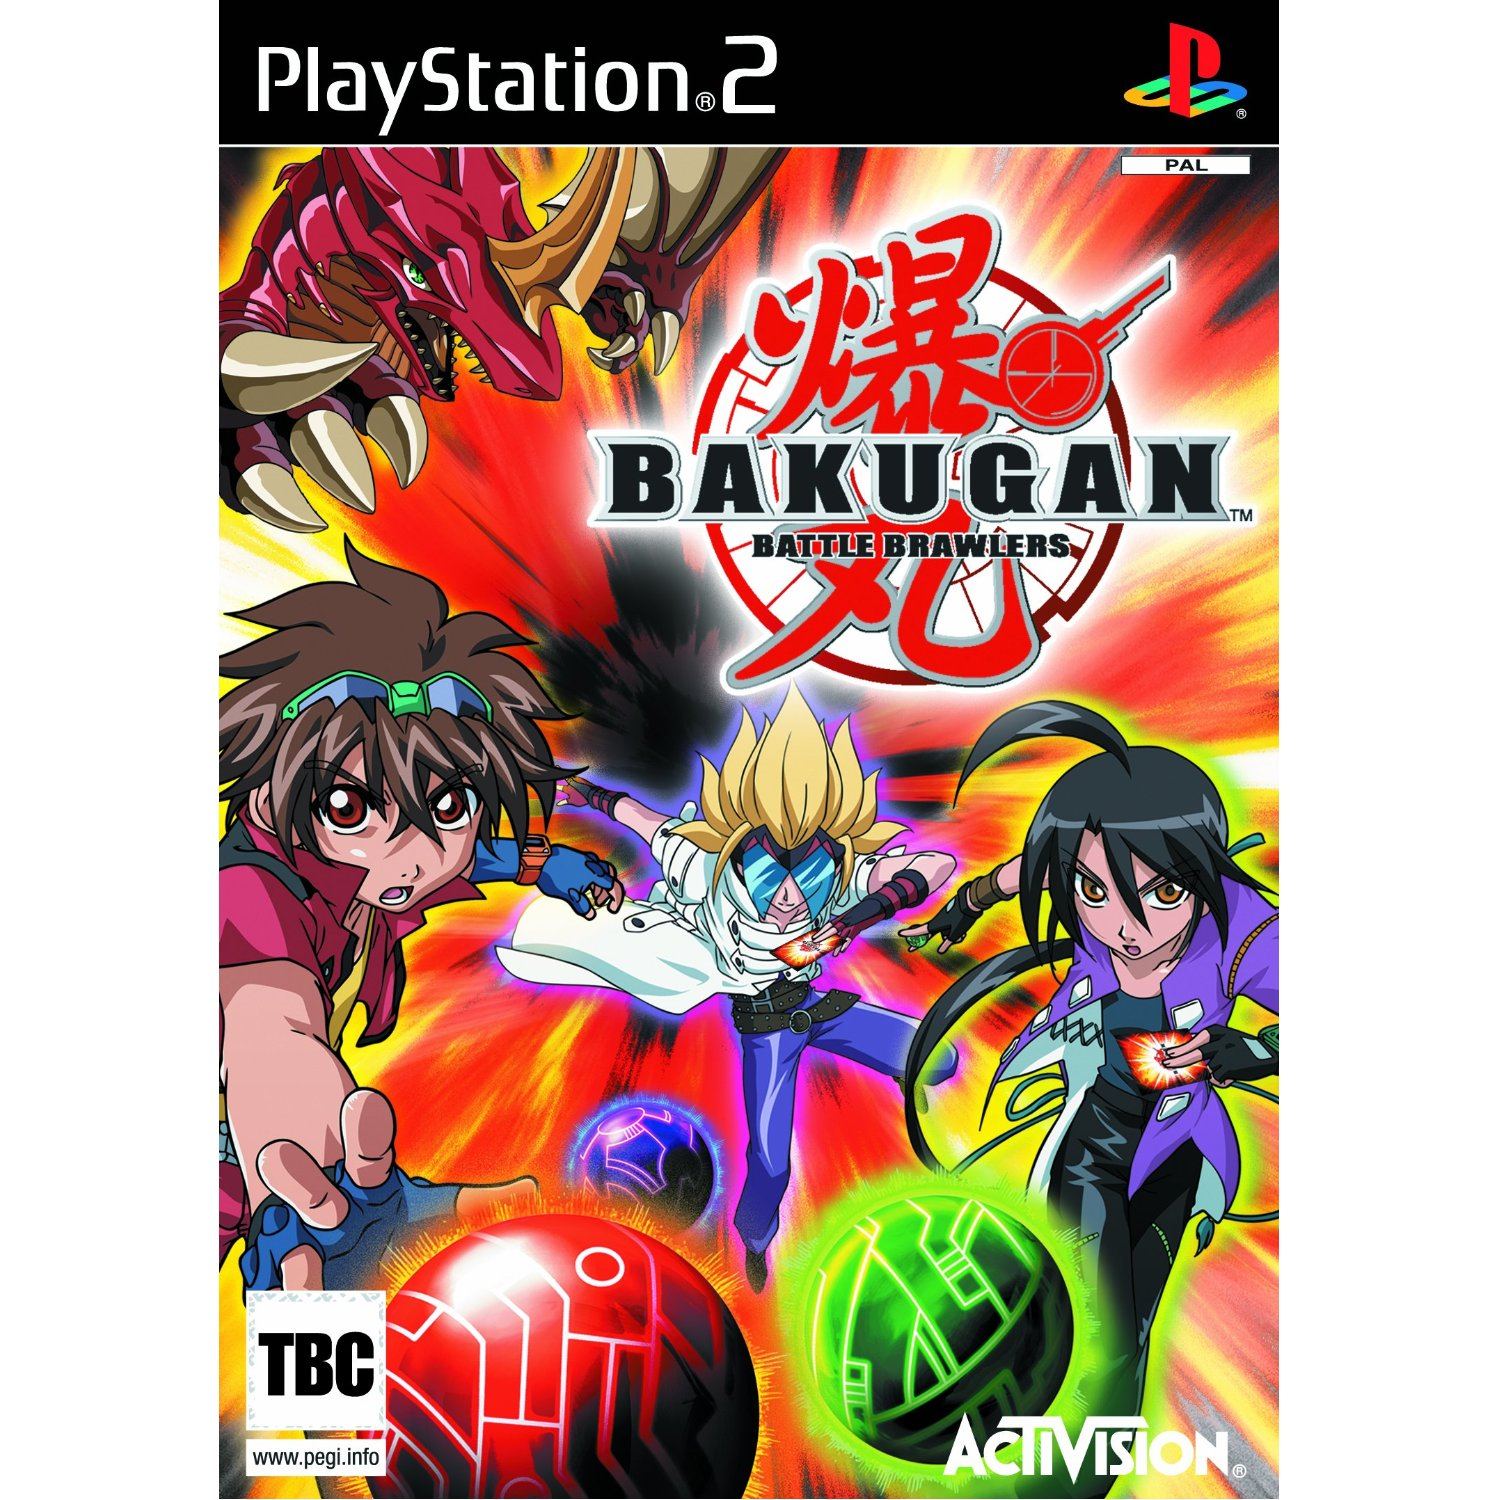 Bakugan Battle Brawlers PlayStation 2